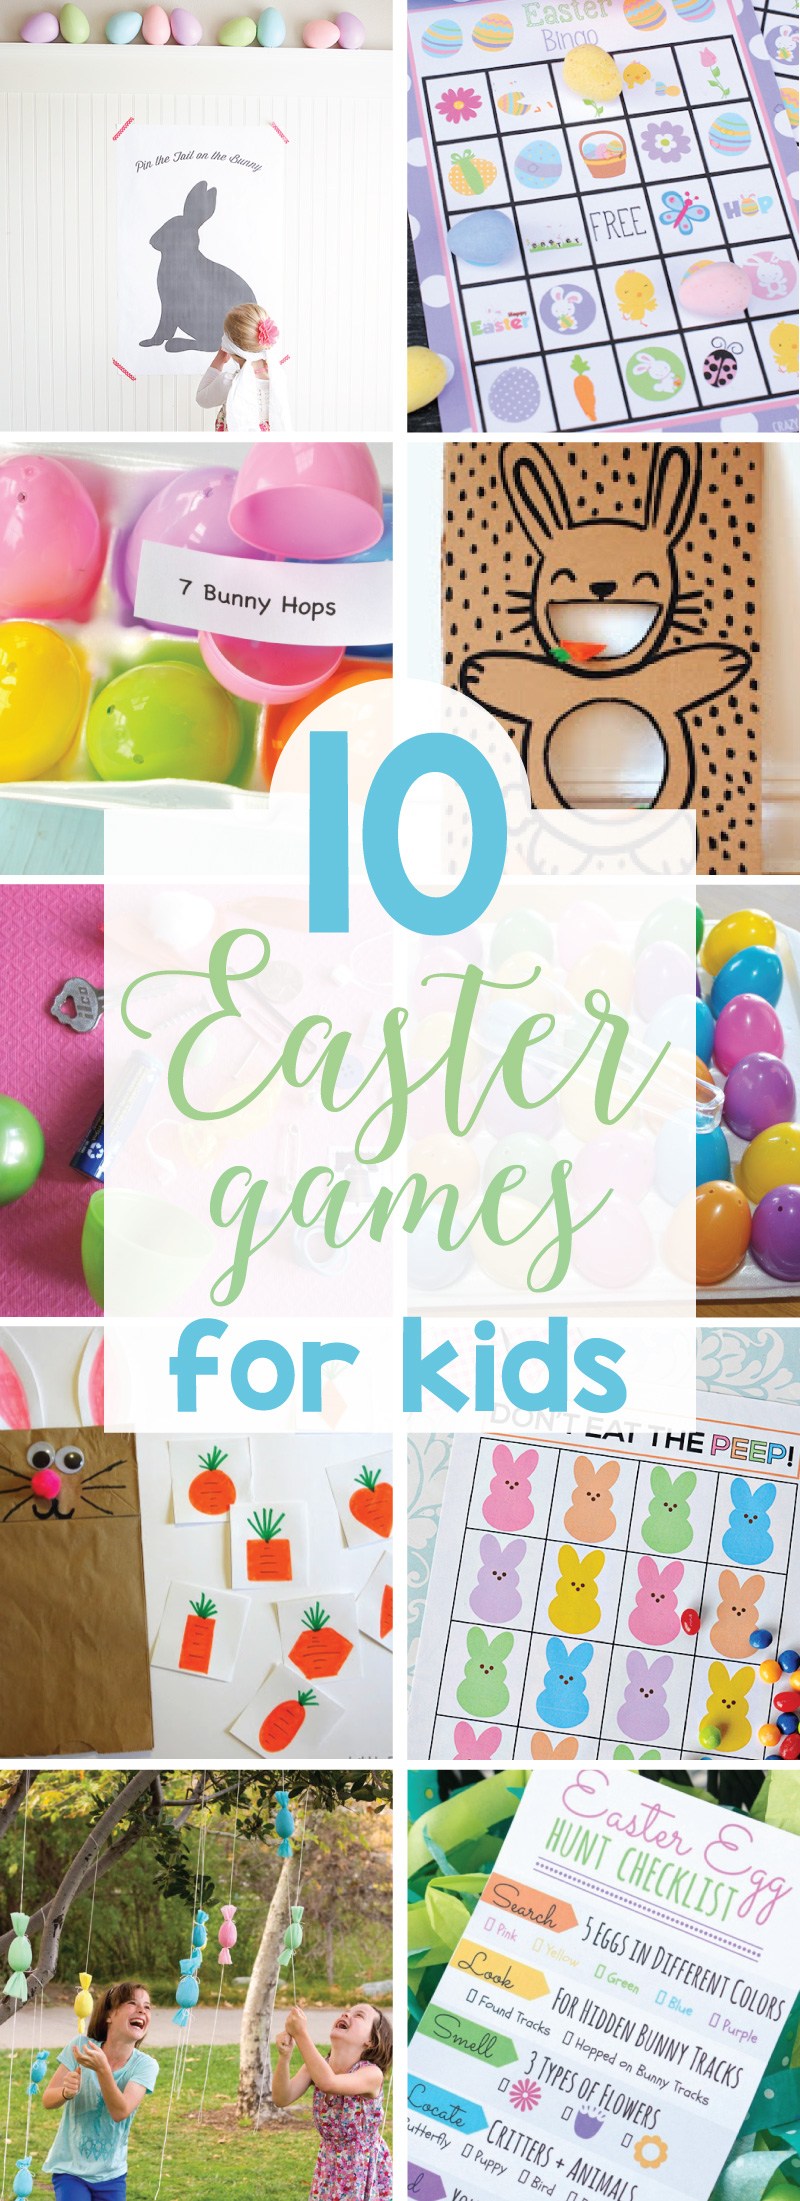 10 easter games for kids